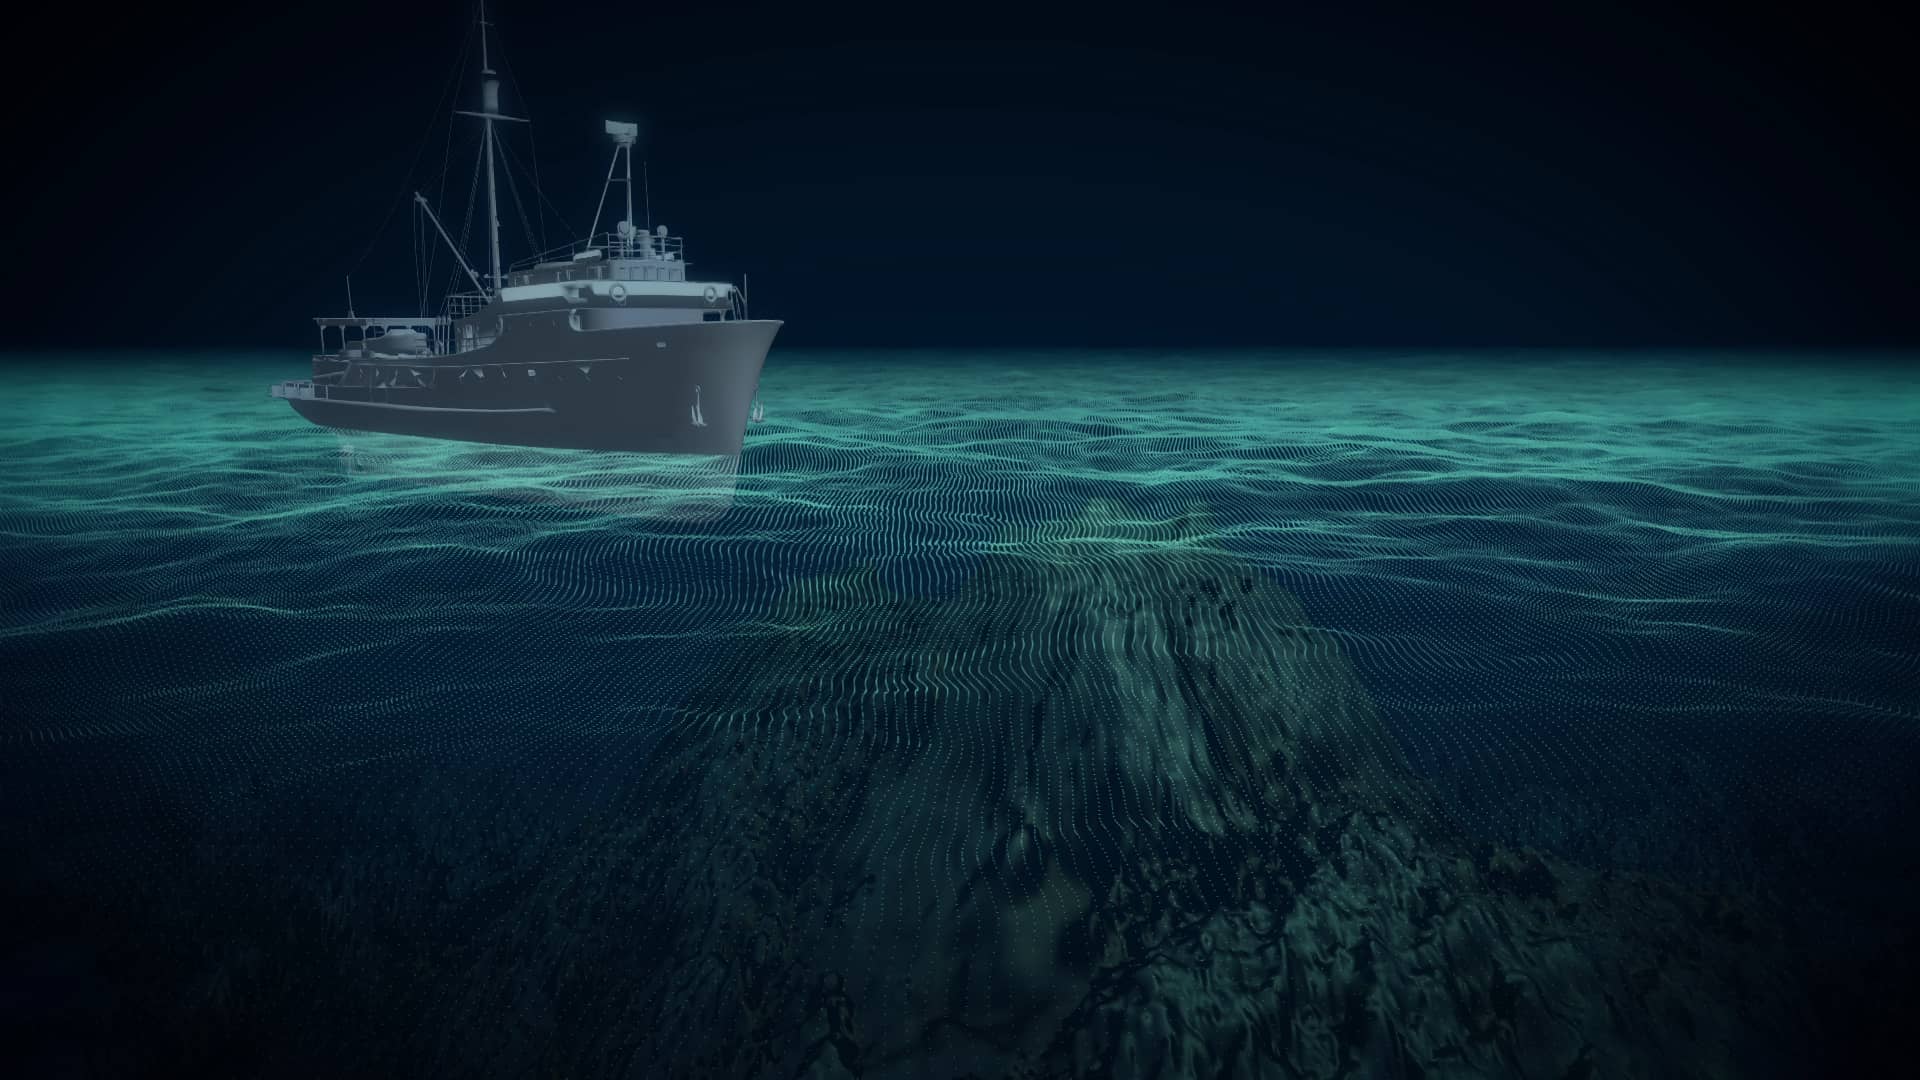 DRAIN THE BERMUDA TRIANGLE 'breakers' endanger ships on Vimeo